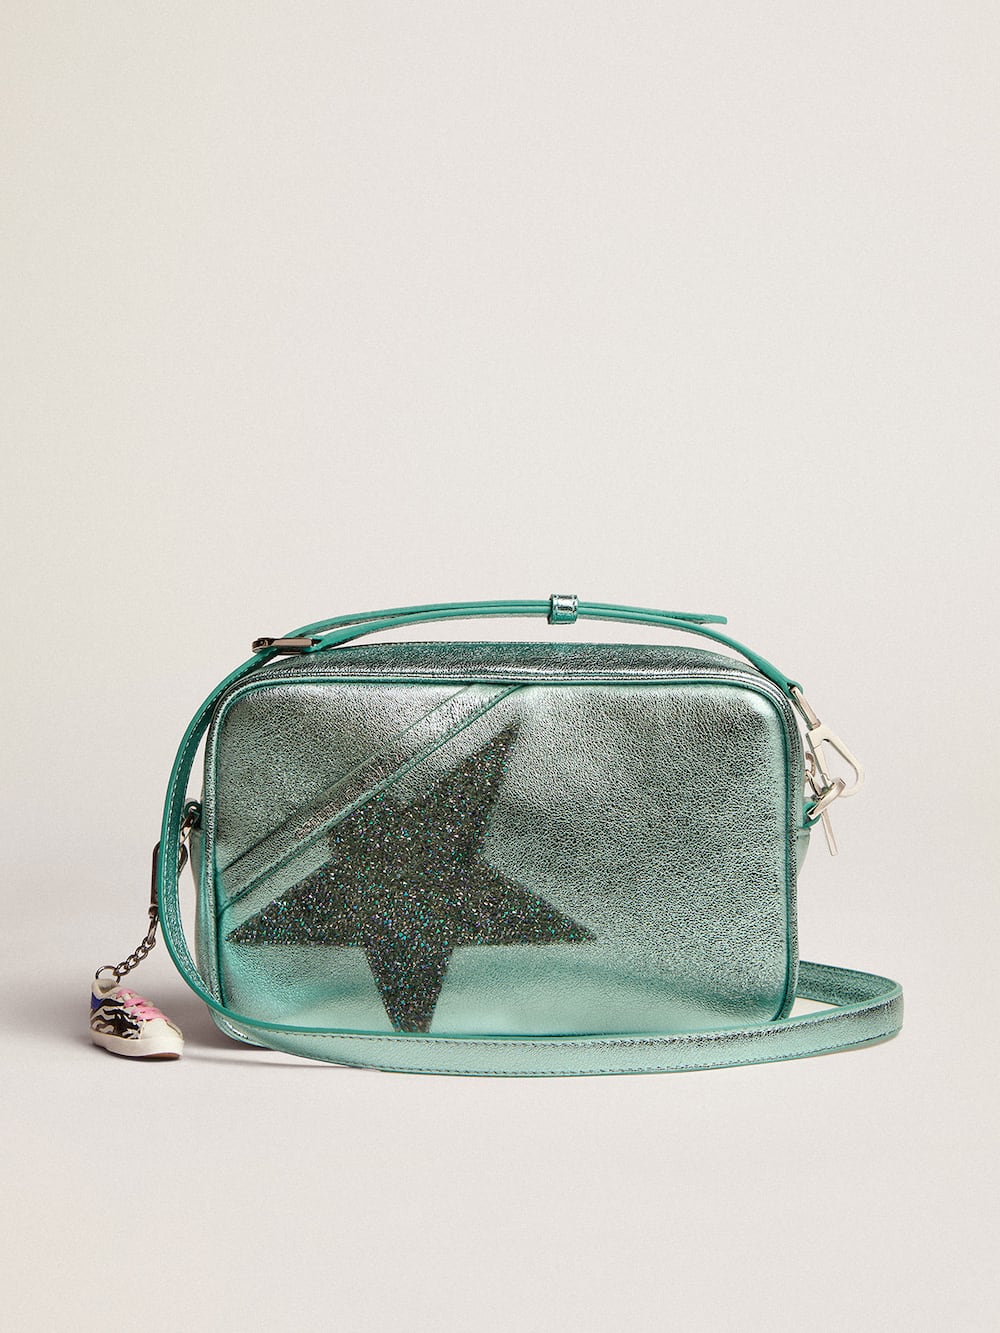 Golden Goose - Star Bag in pelle laminata turchese e stella in cristalli Swarovski in 